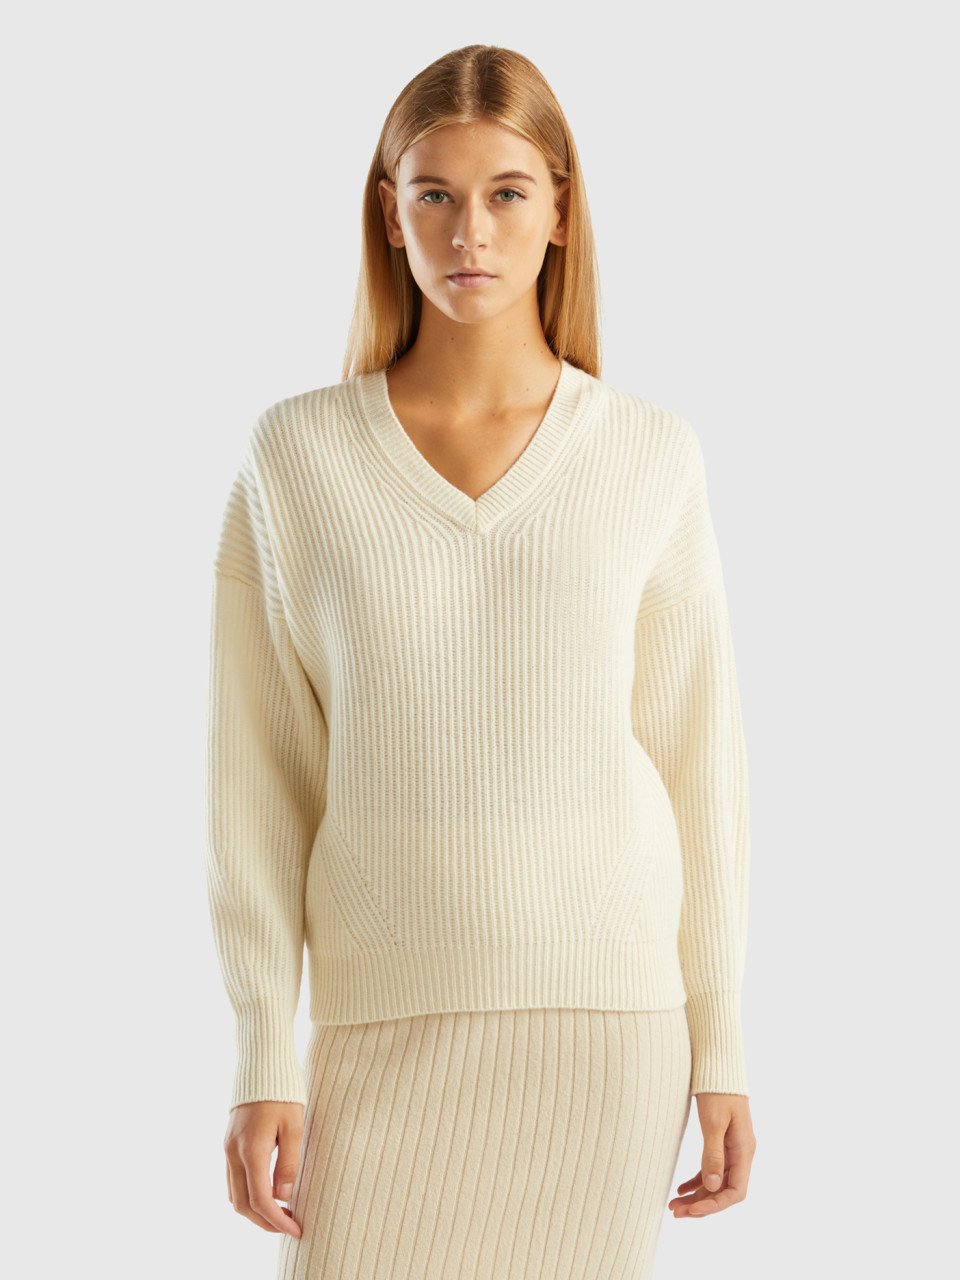 Benetton, Soft Sweater With V-neck, Creamy White, Women